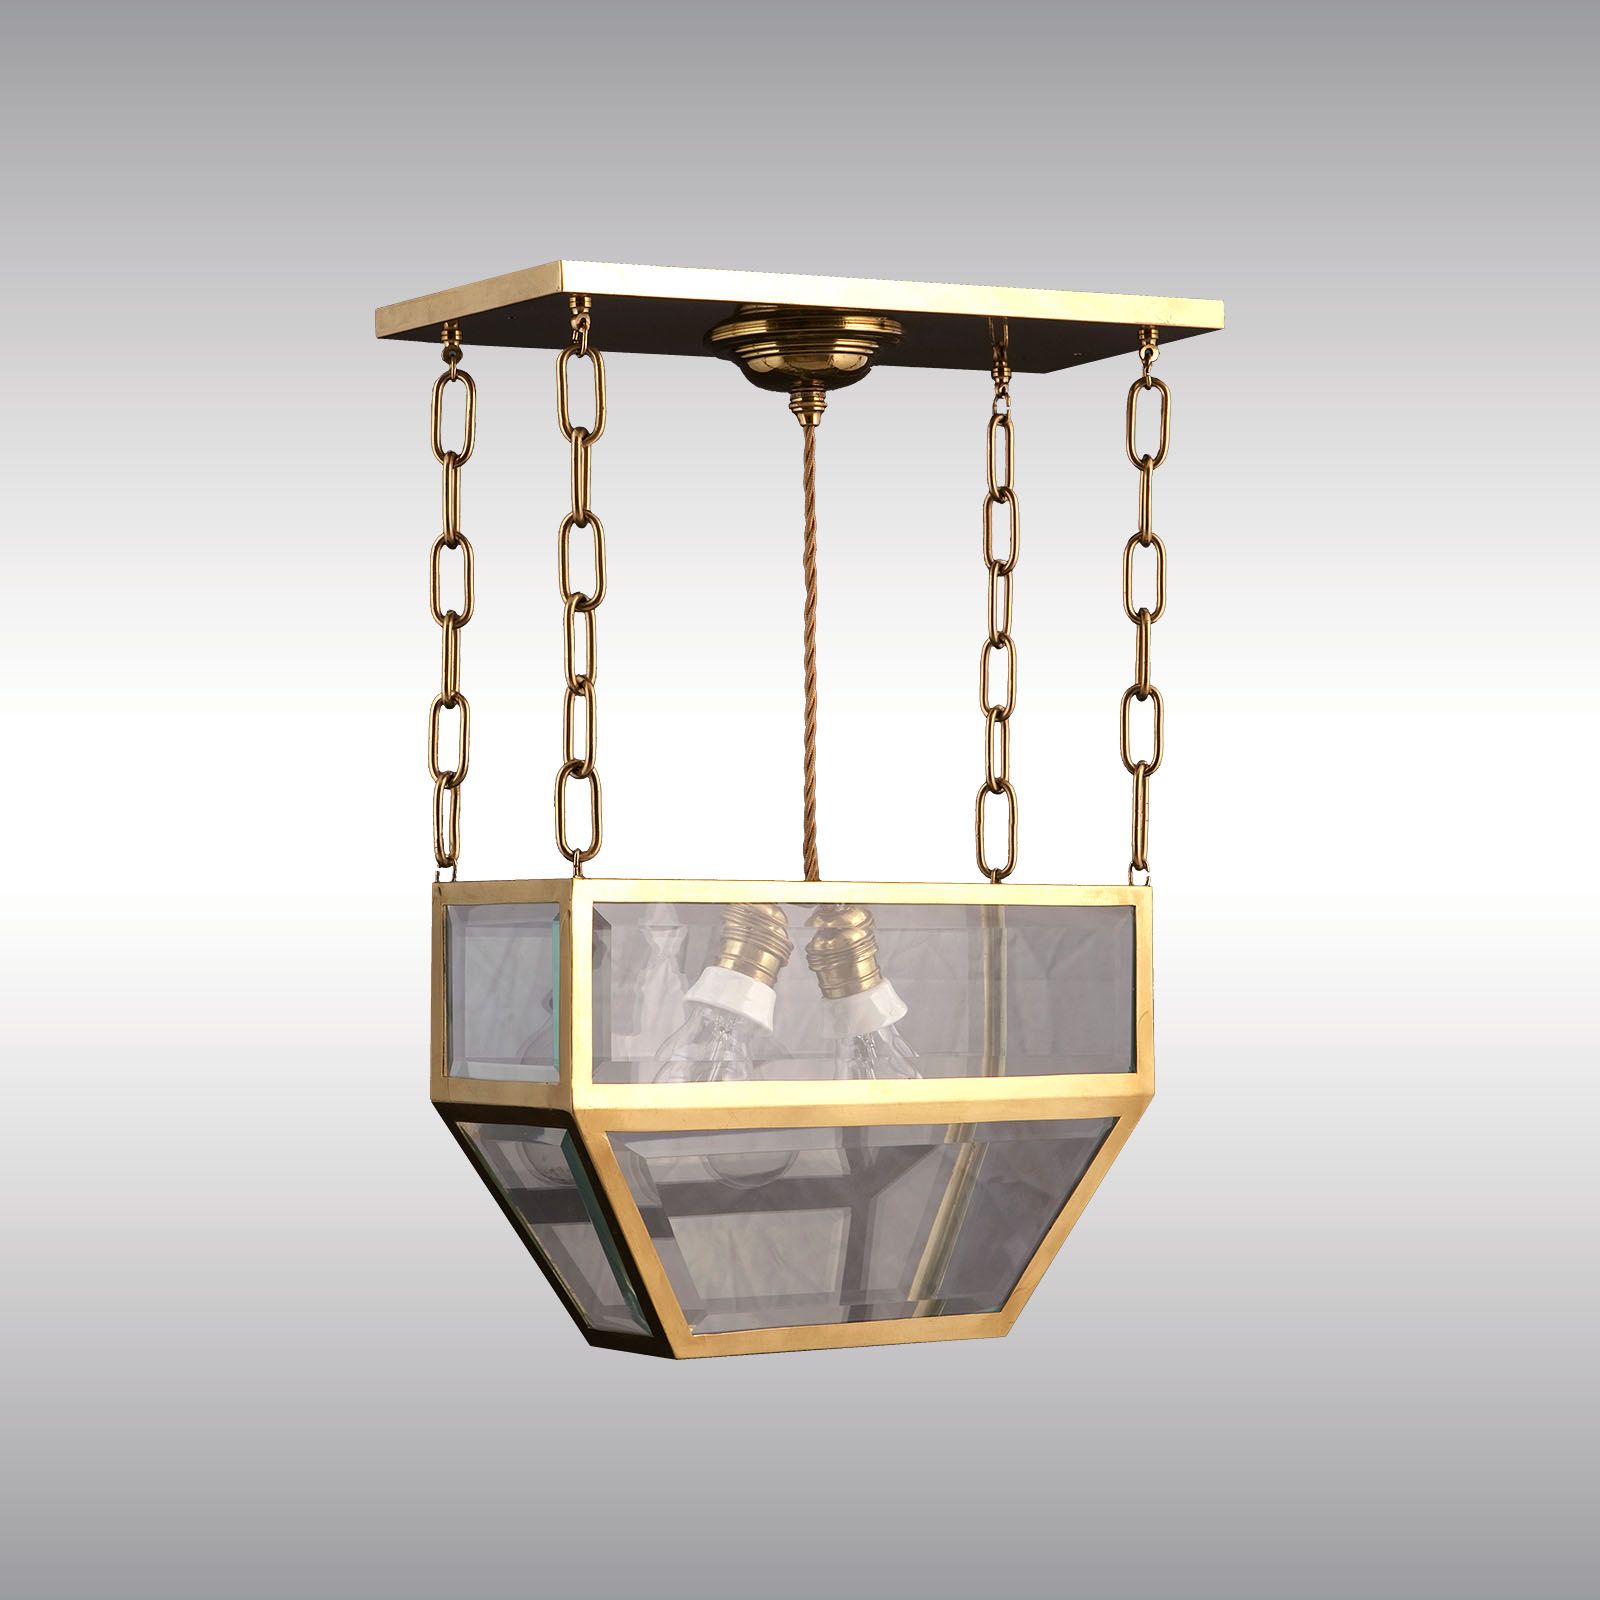 WOKA LAMPS VIENNA - OrderNr.: 21112|Pendenlampe - Design: Josef Hoffmann attr.